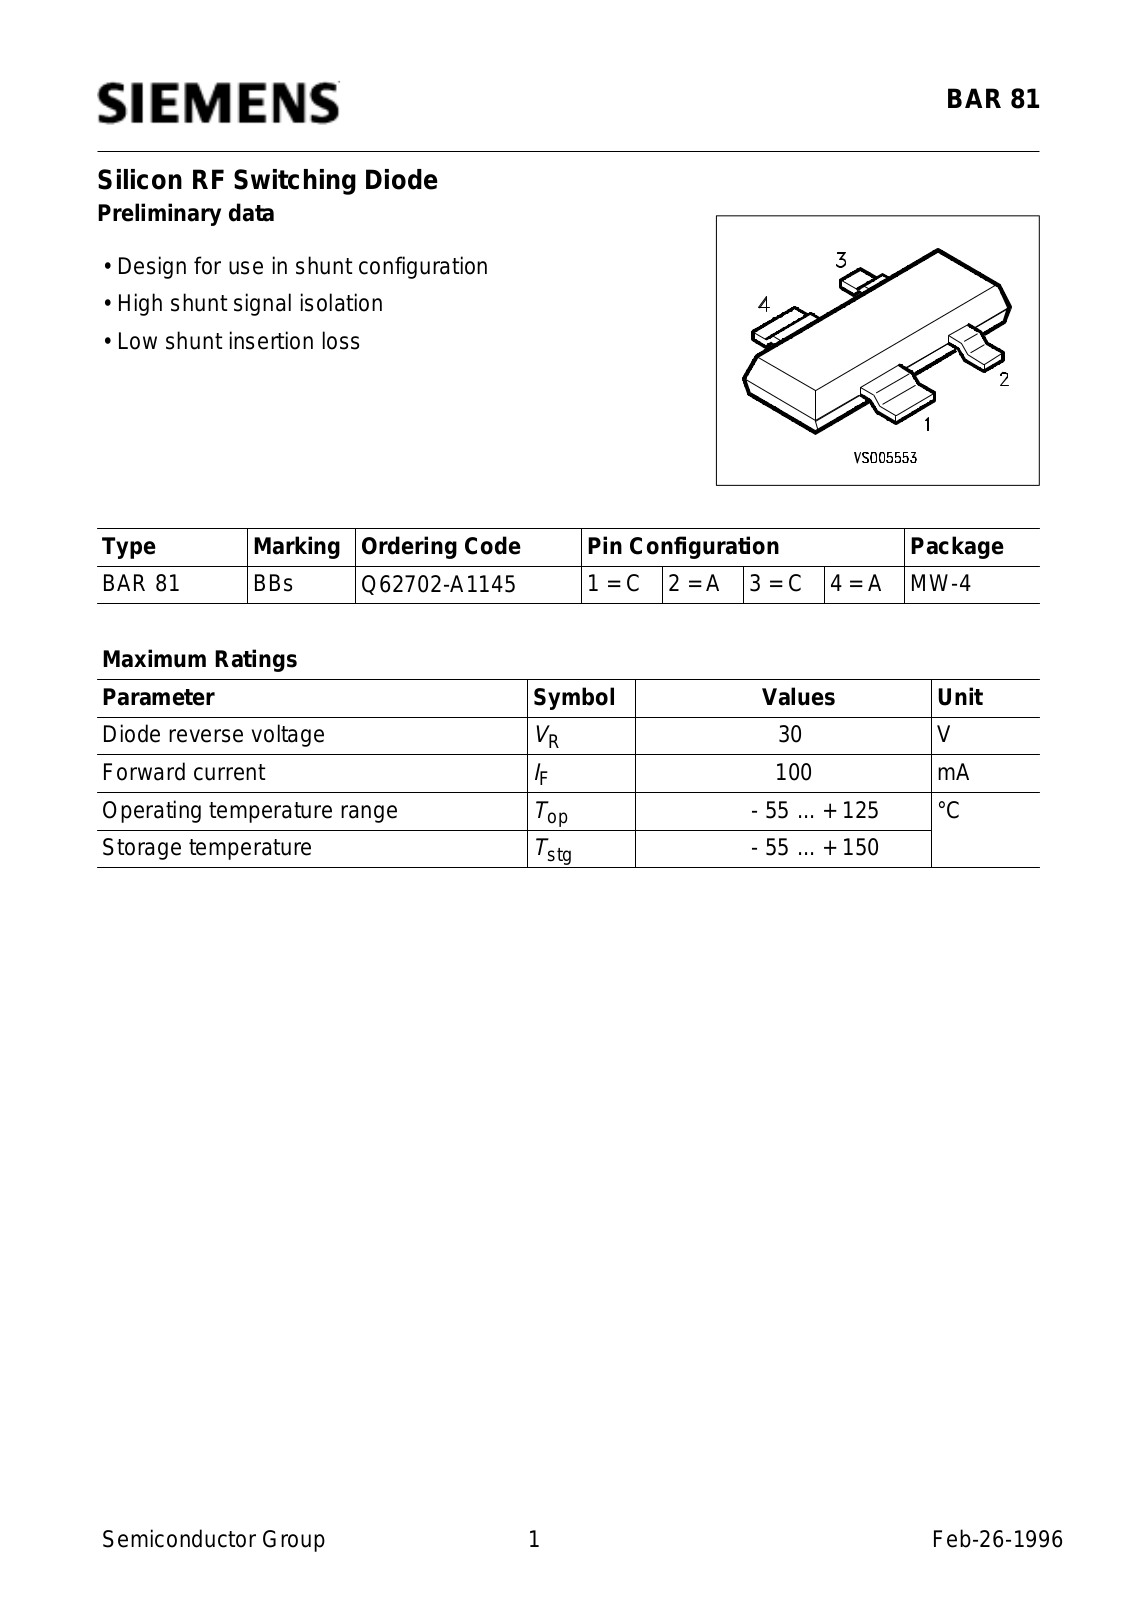 Siemens BAR81 Datasheet